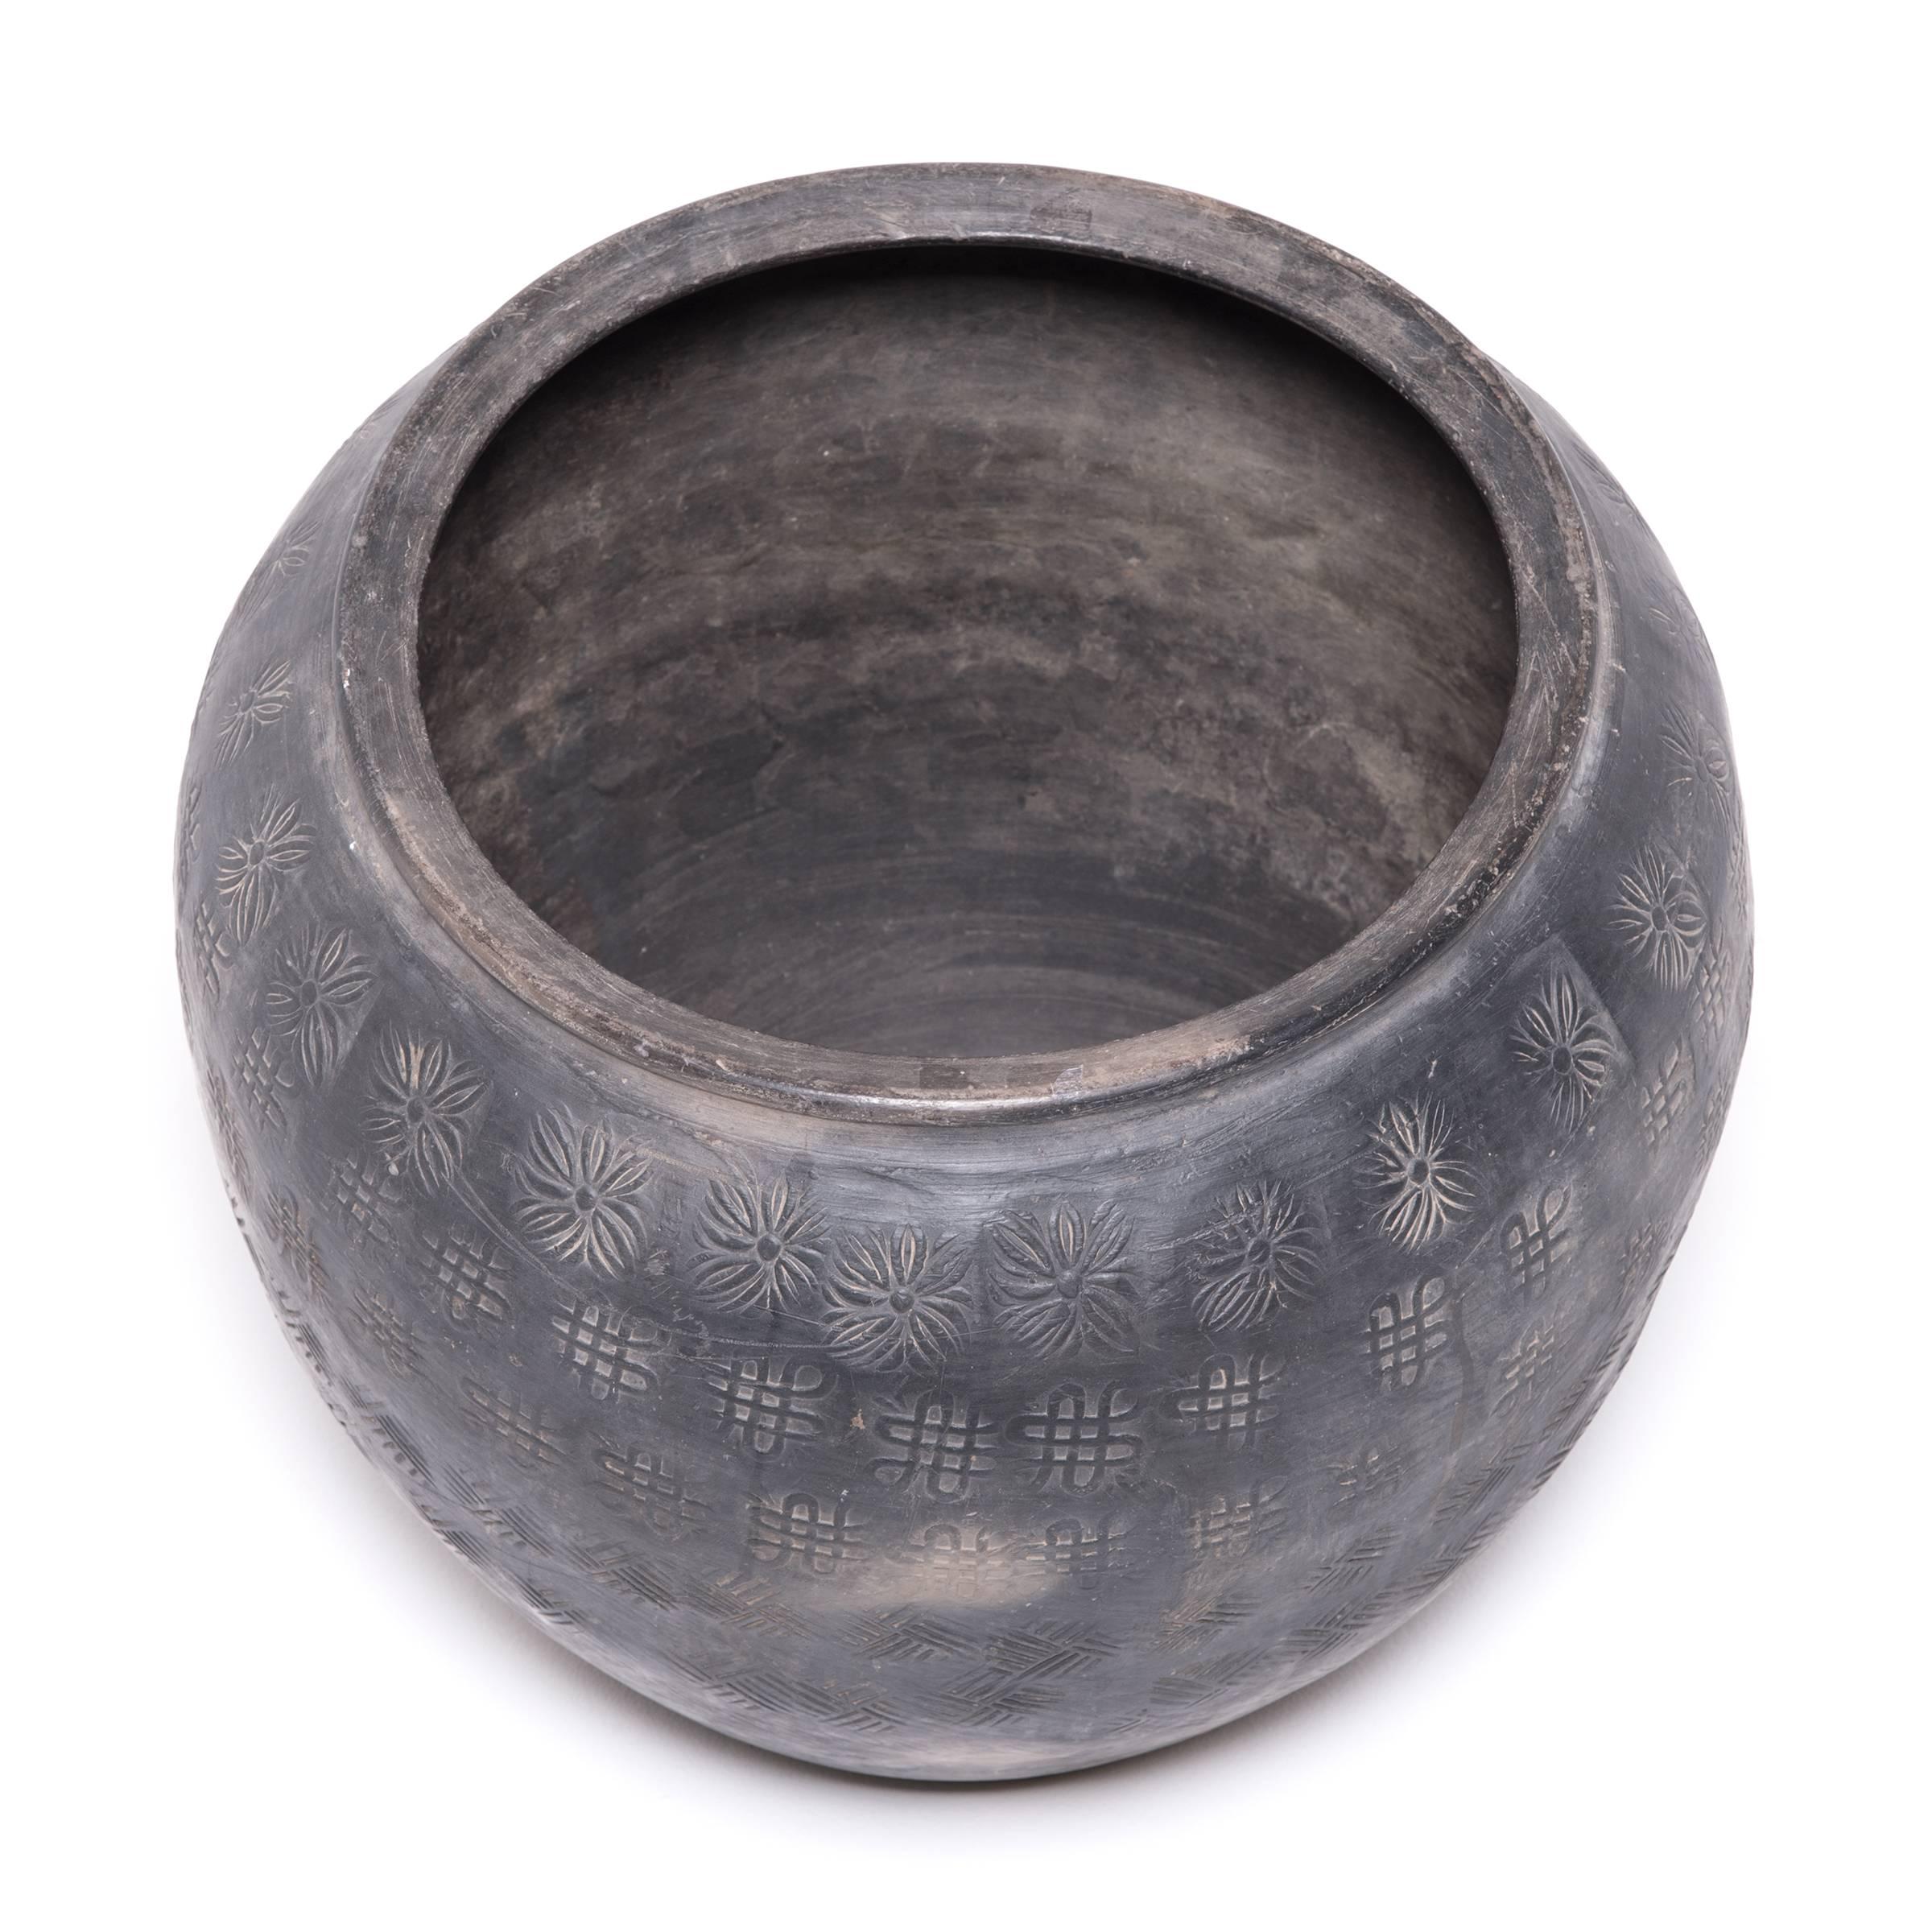 20th Century Chinese Unglazed Stamped Clay Jar